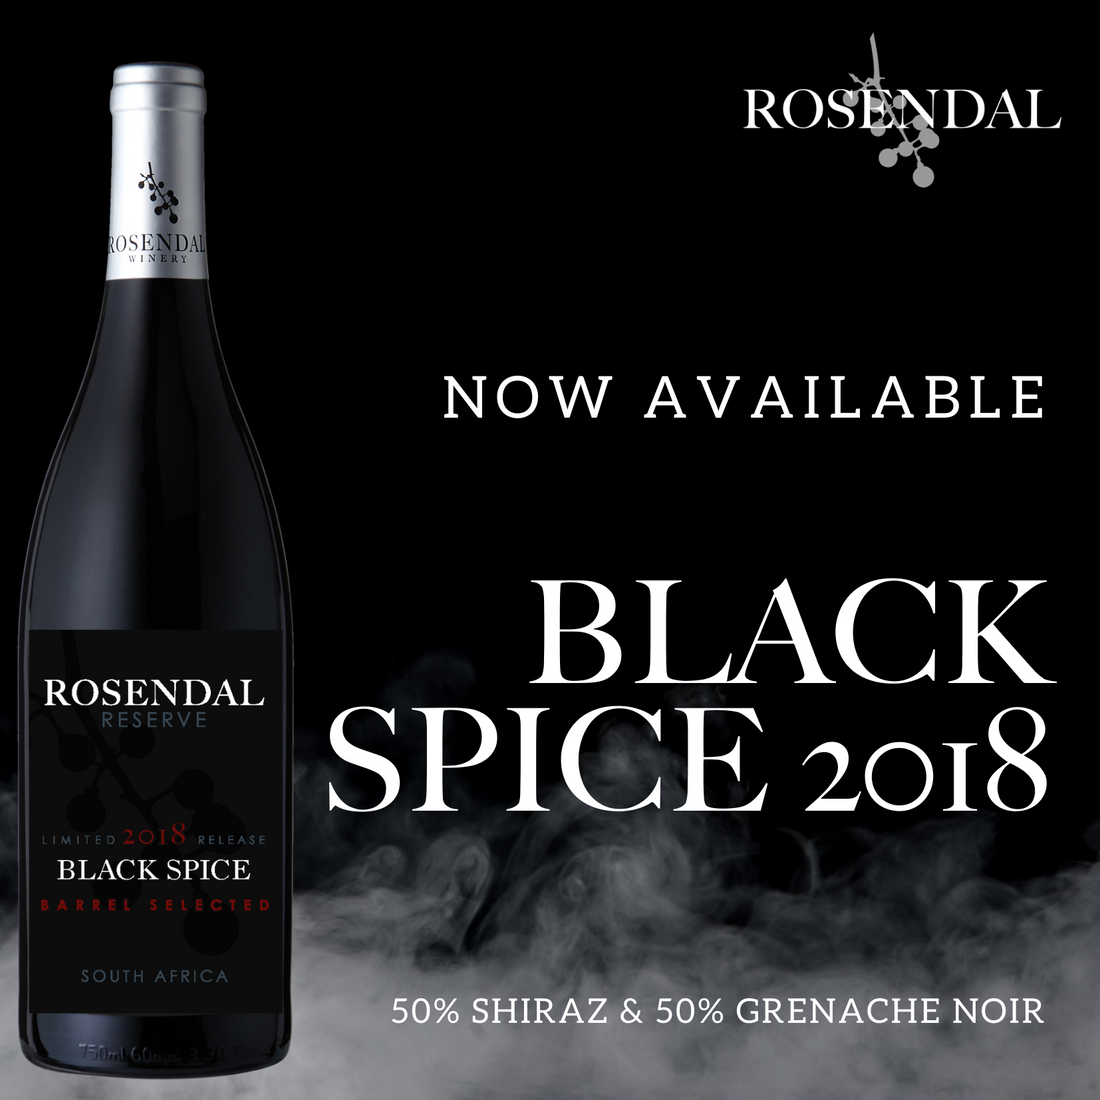 Back by popular demand!  Reserve Black Spice 2018